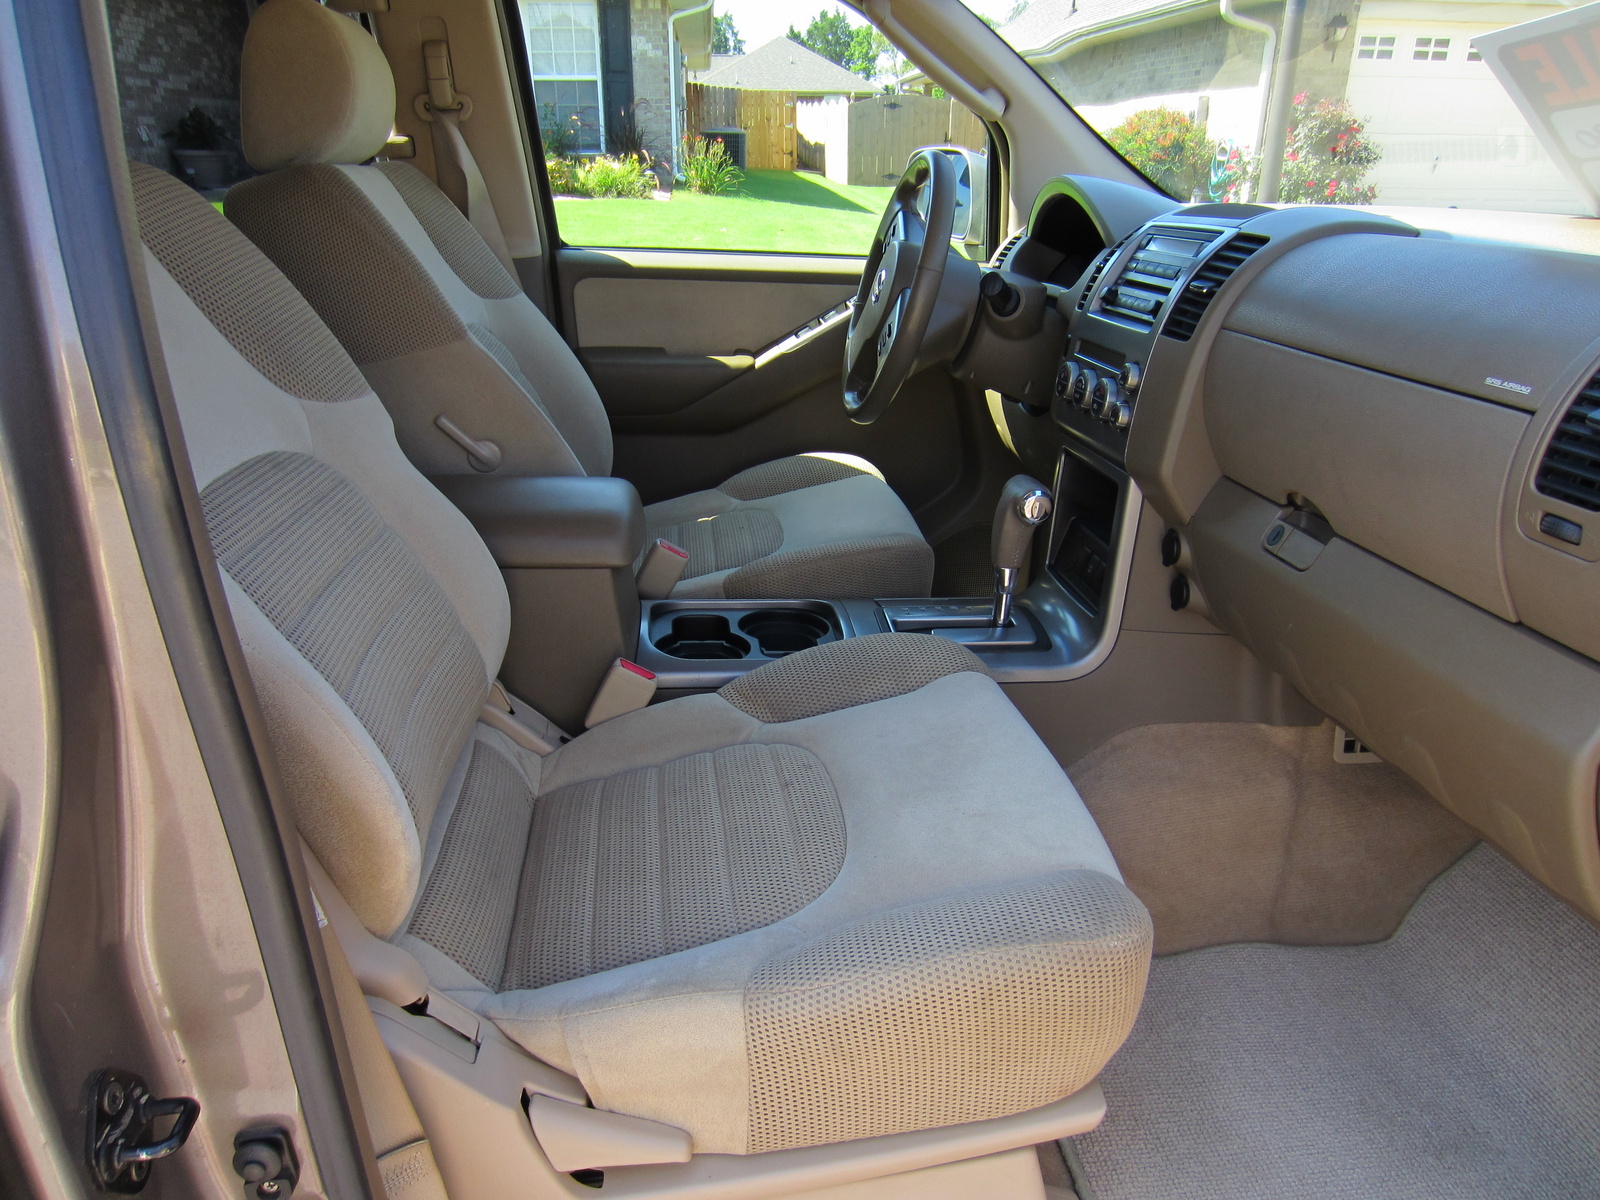 2005 Nissan pathfinder xe interior #9